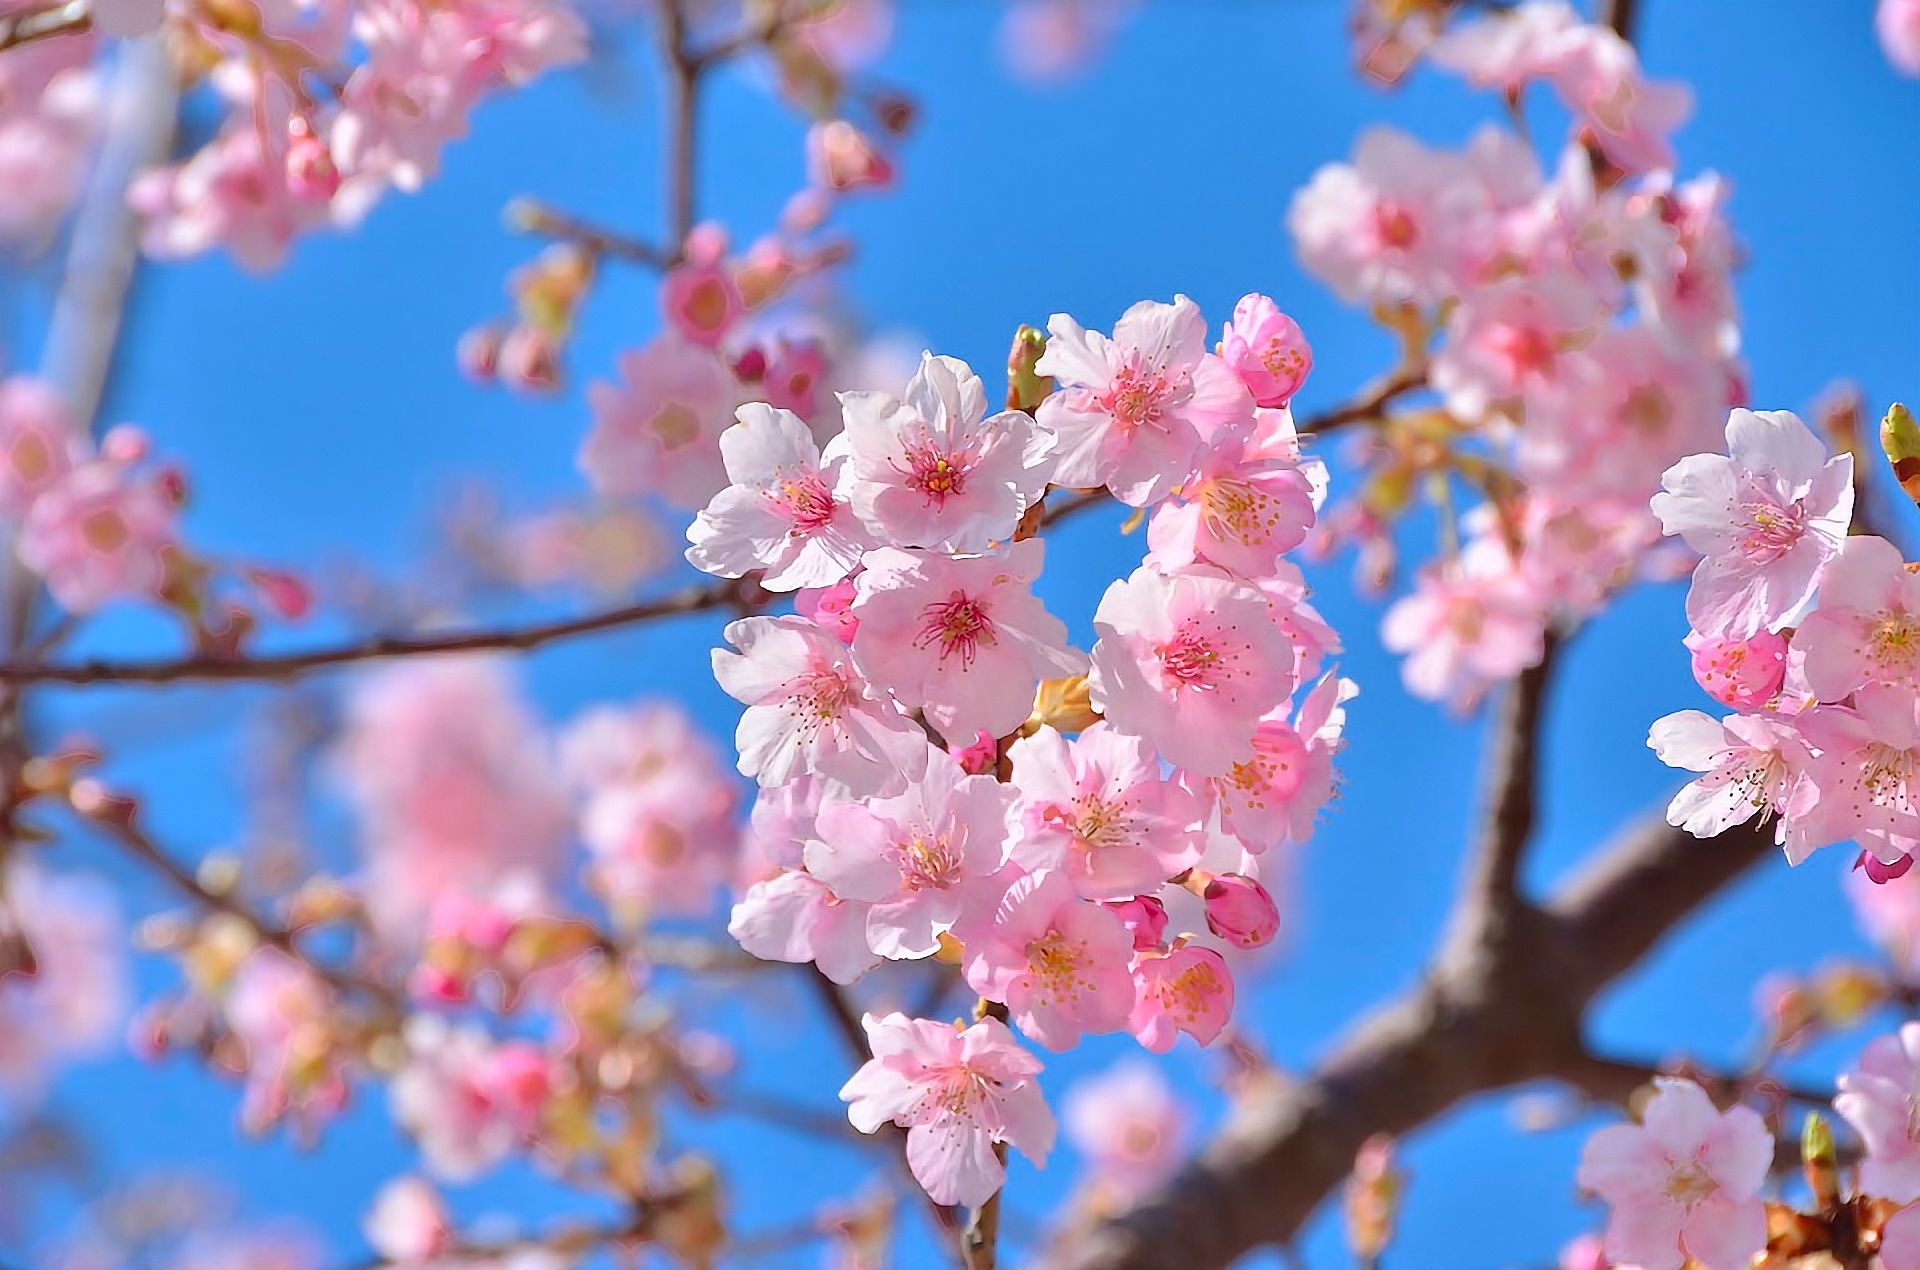 Spring user. Черри блоссом цветок. Сакура черри блоссом. Сакура черри блоссом дерево.